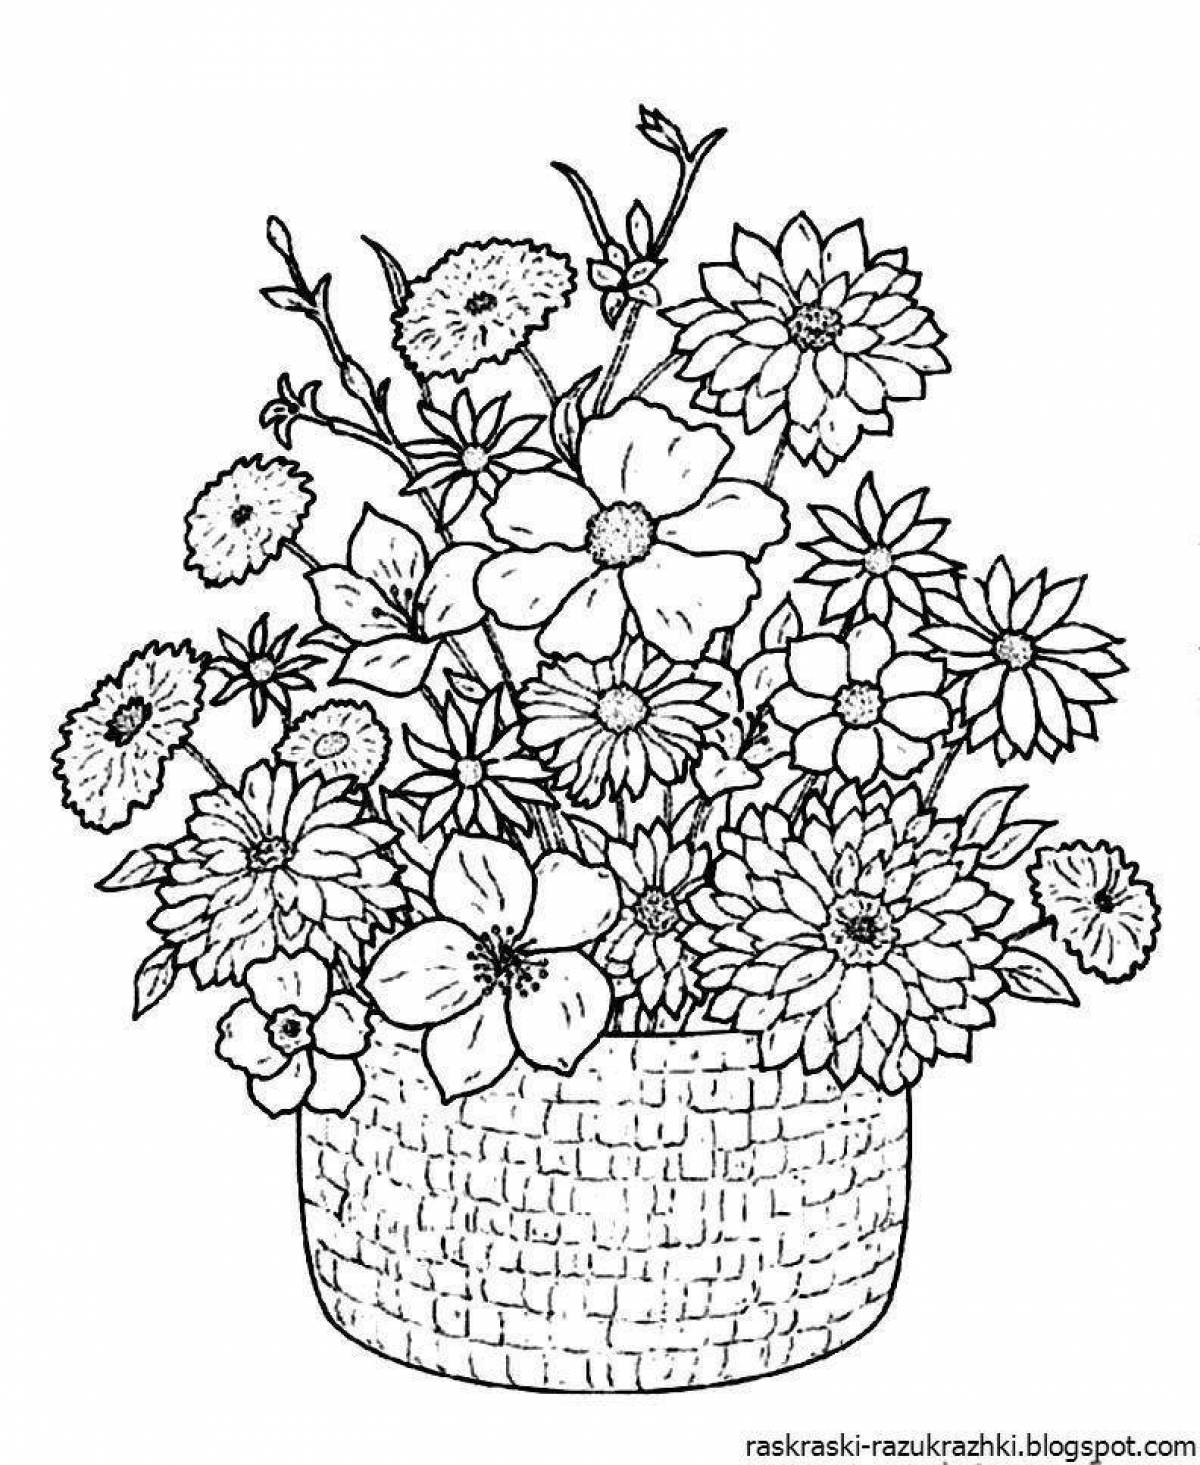 Coloring big basket of flowers